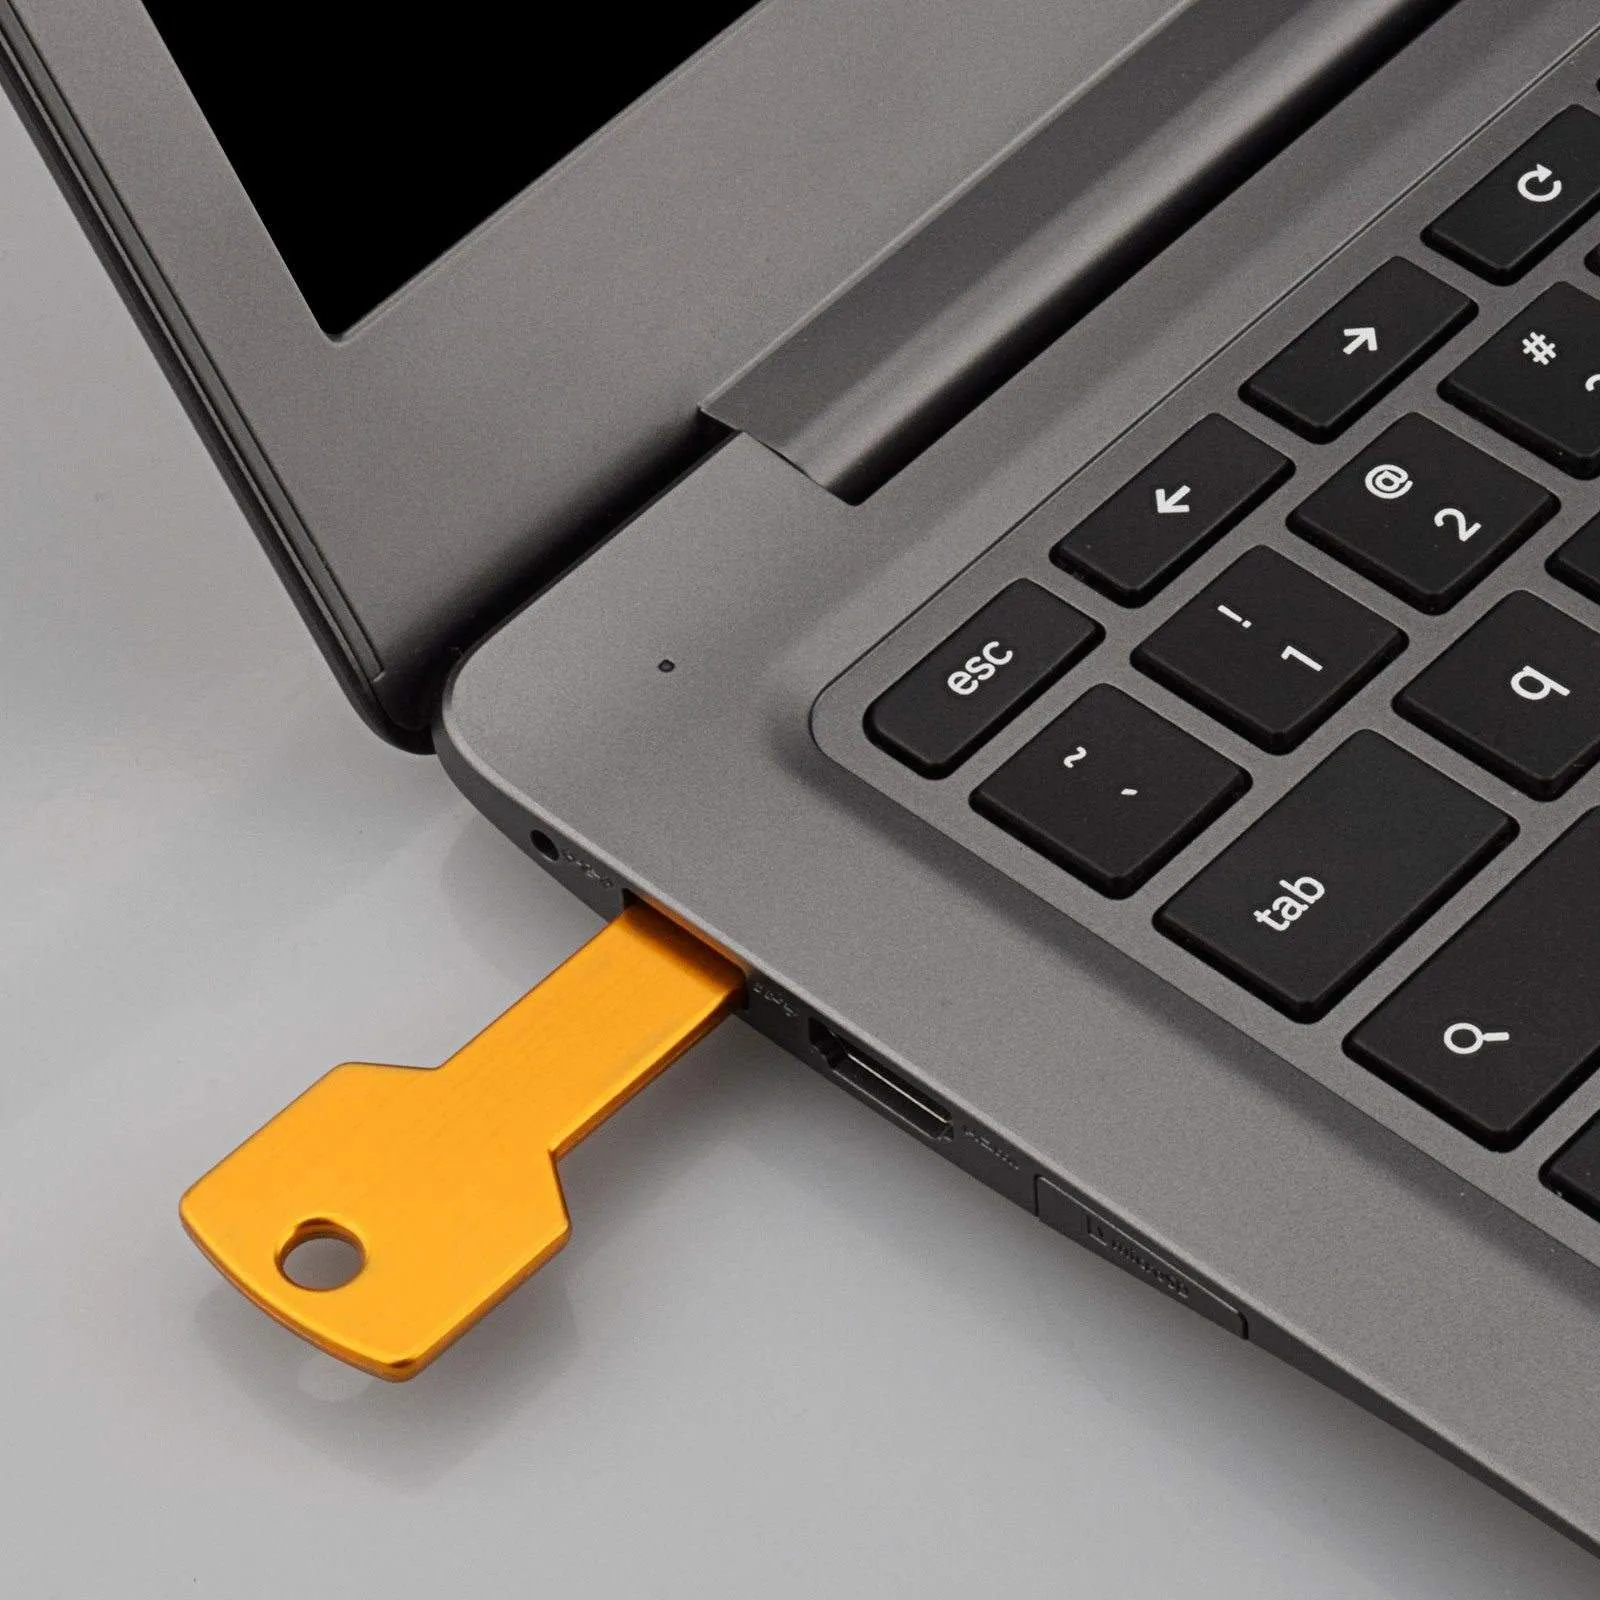 Jboxing Gold Metal Key 32GB USB 20 Flash Drives 32gb Flash Pen Drive Thumb Storage Enough Memory Stick for PC Laptop Macbook